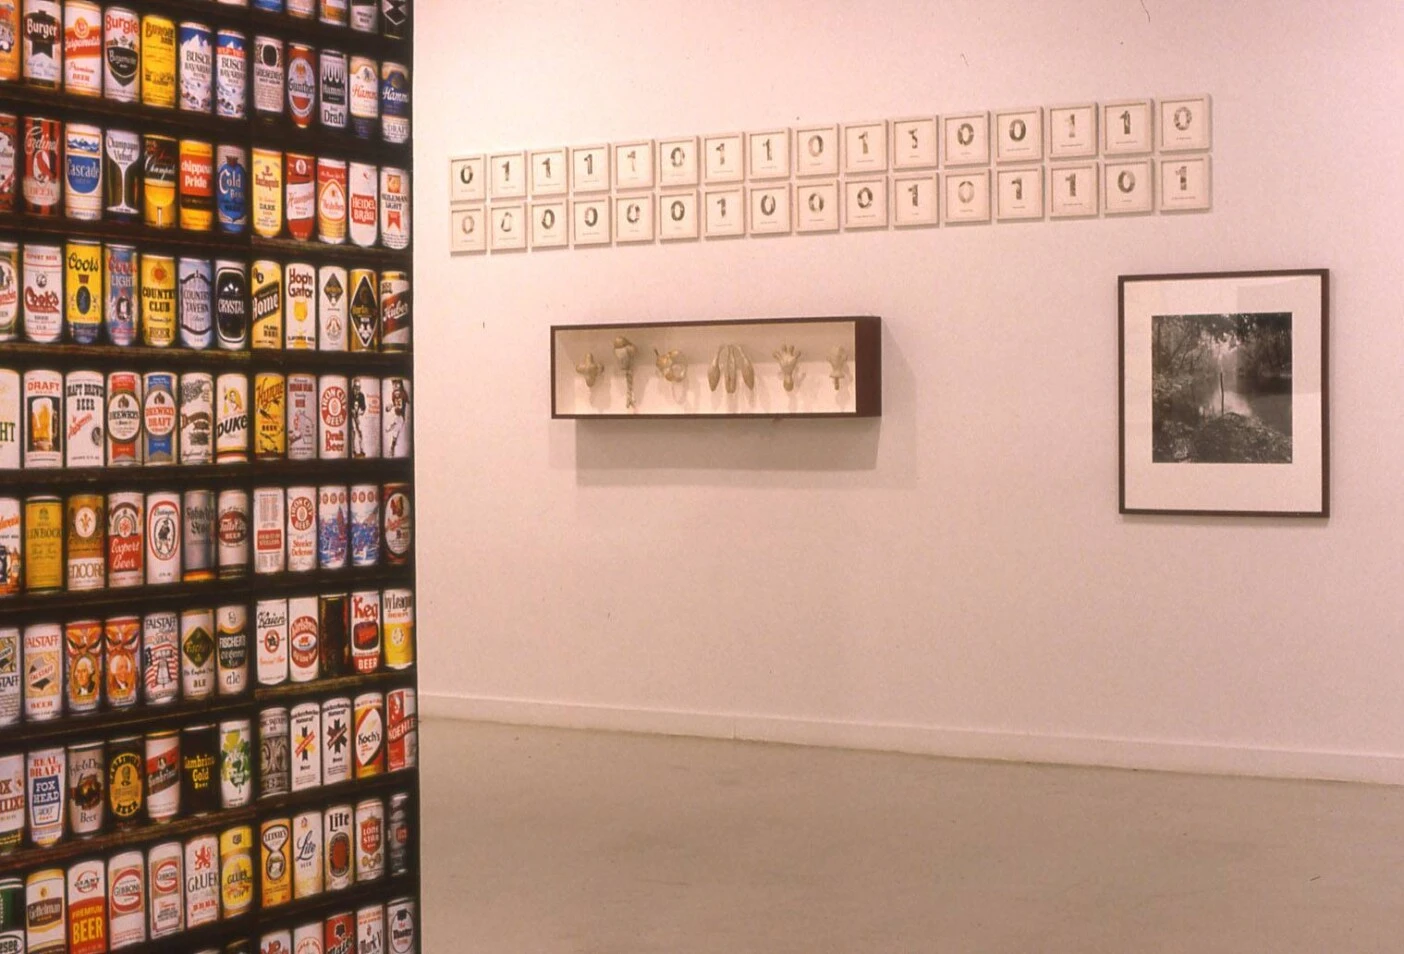 Gallery walls exhibiting different artwork